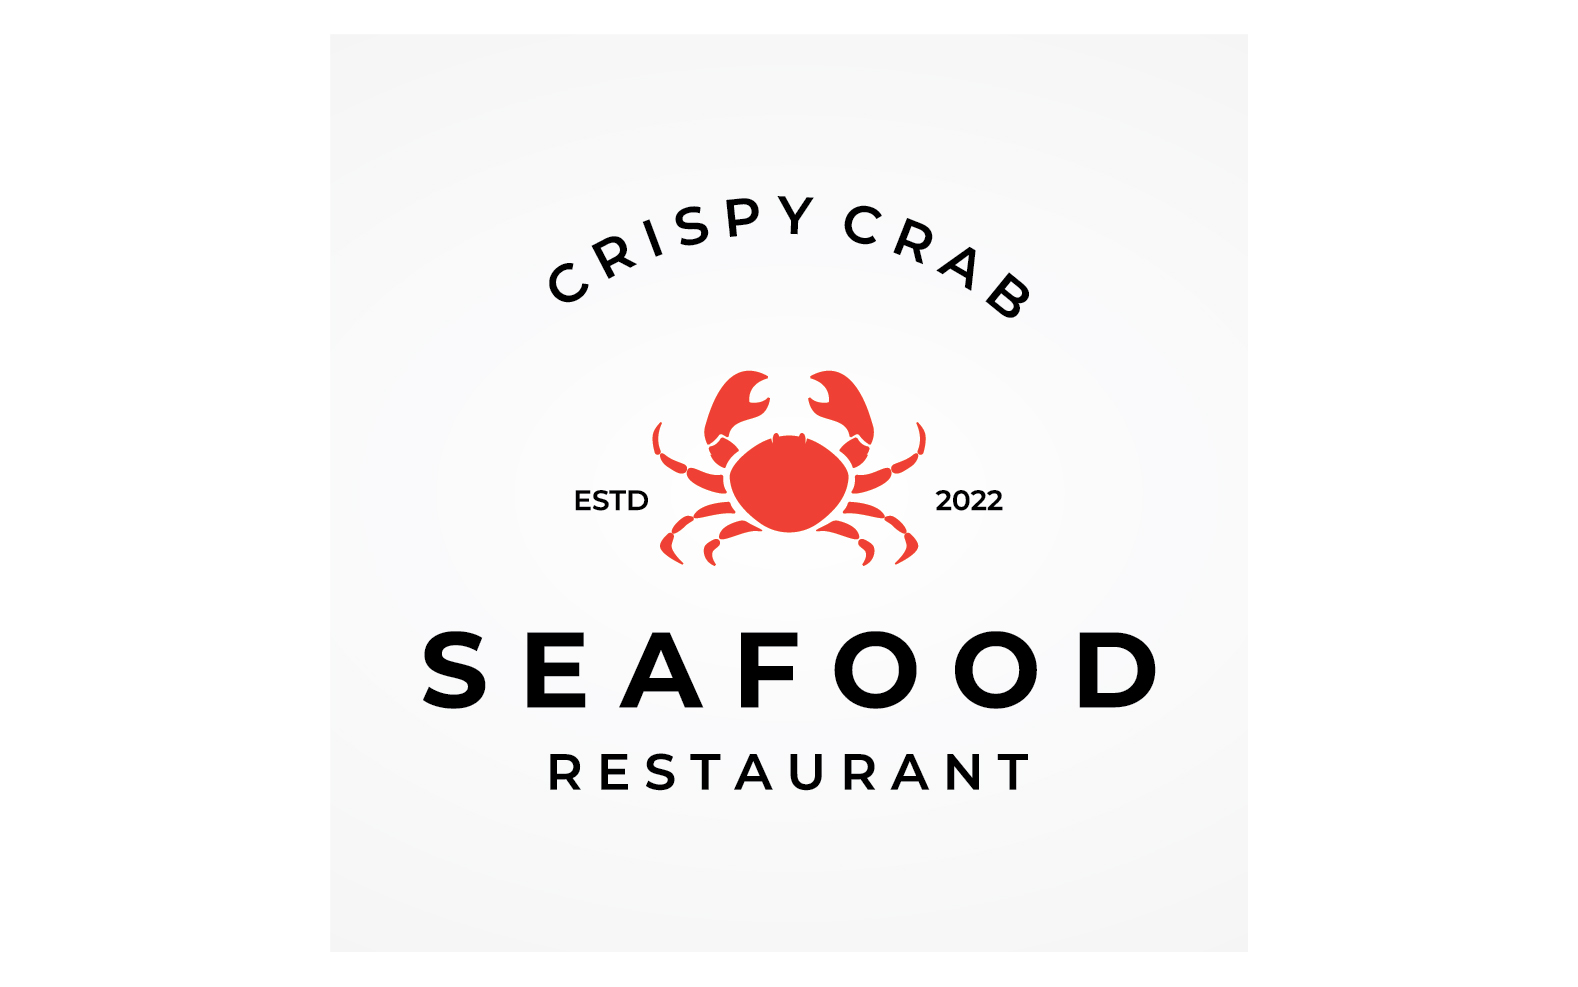 Seafood crab food fresh logo 2